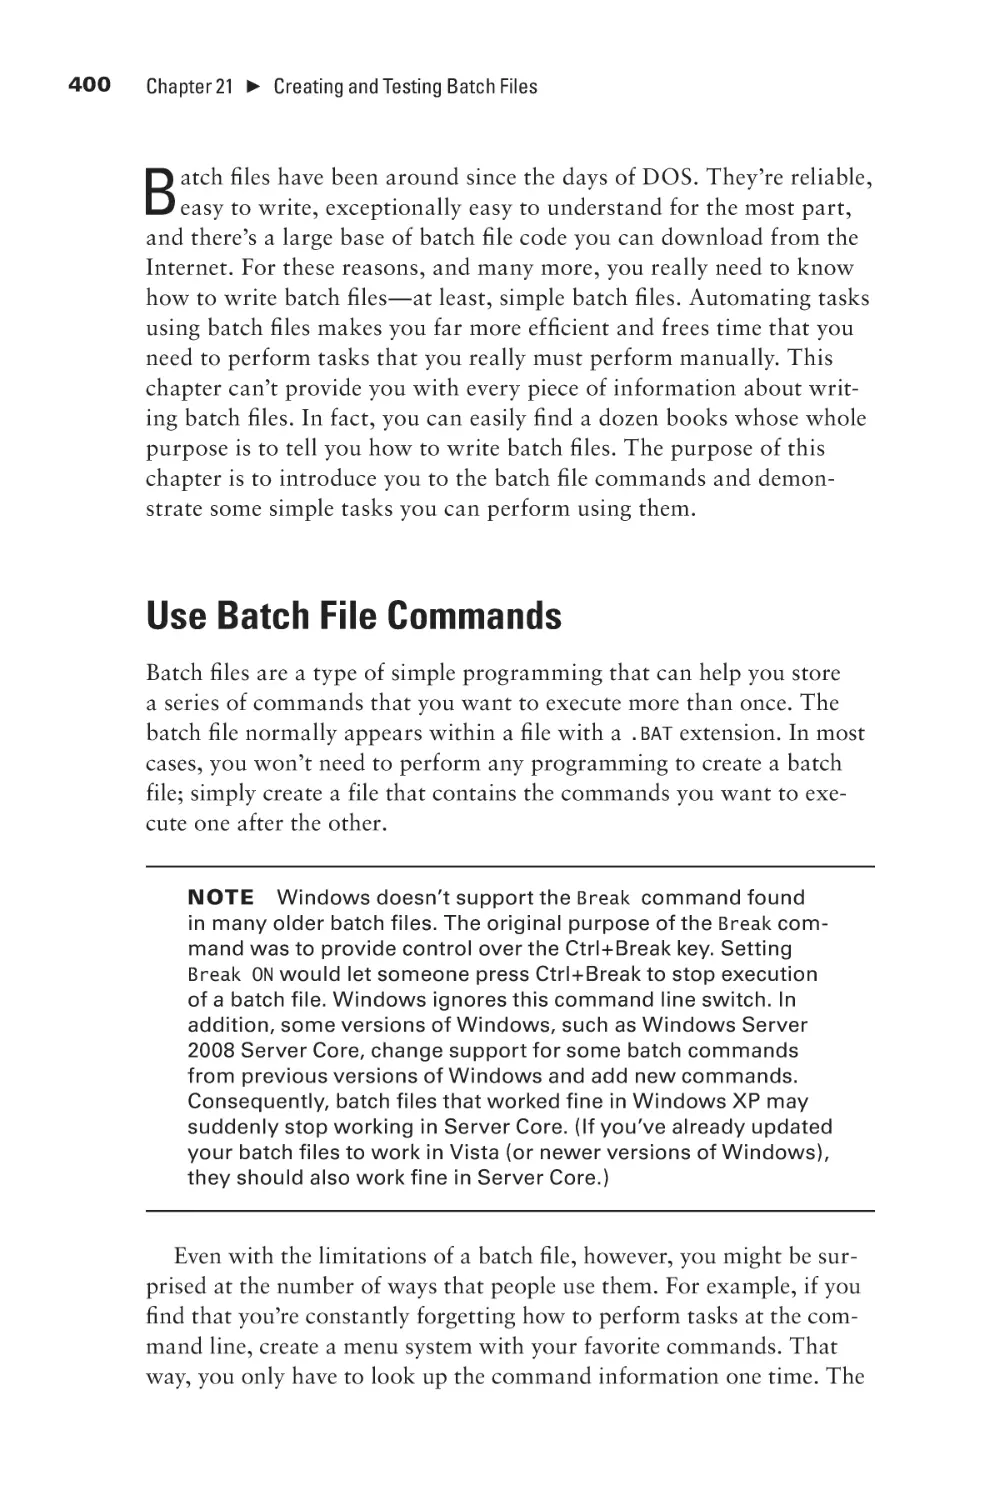 Use Batch File Commands